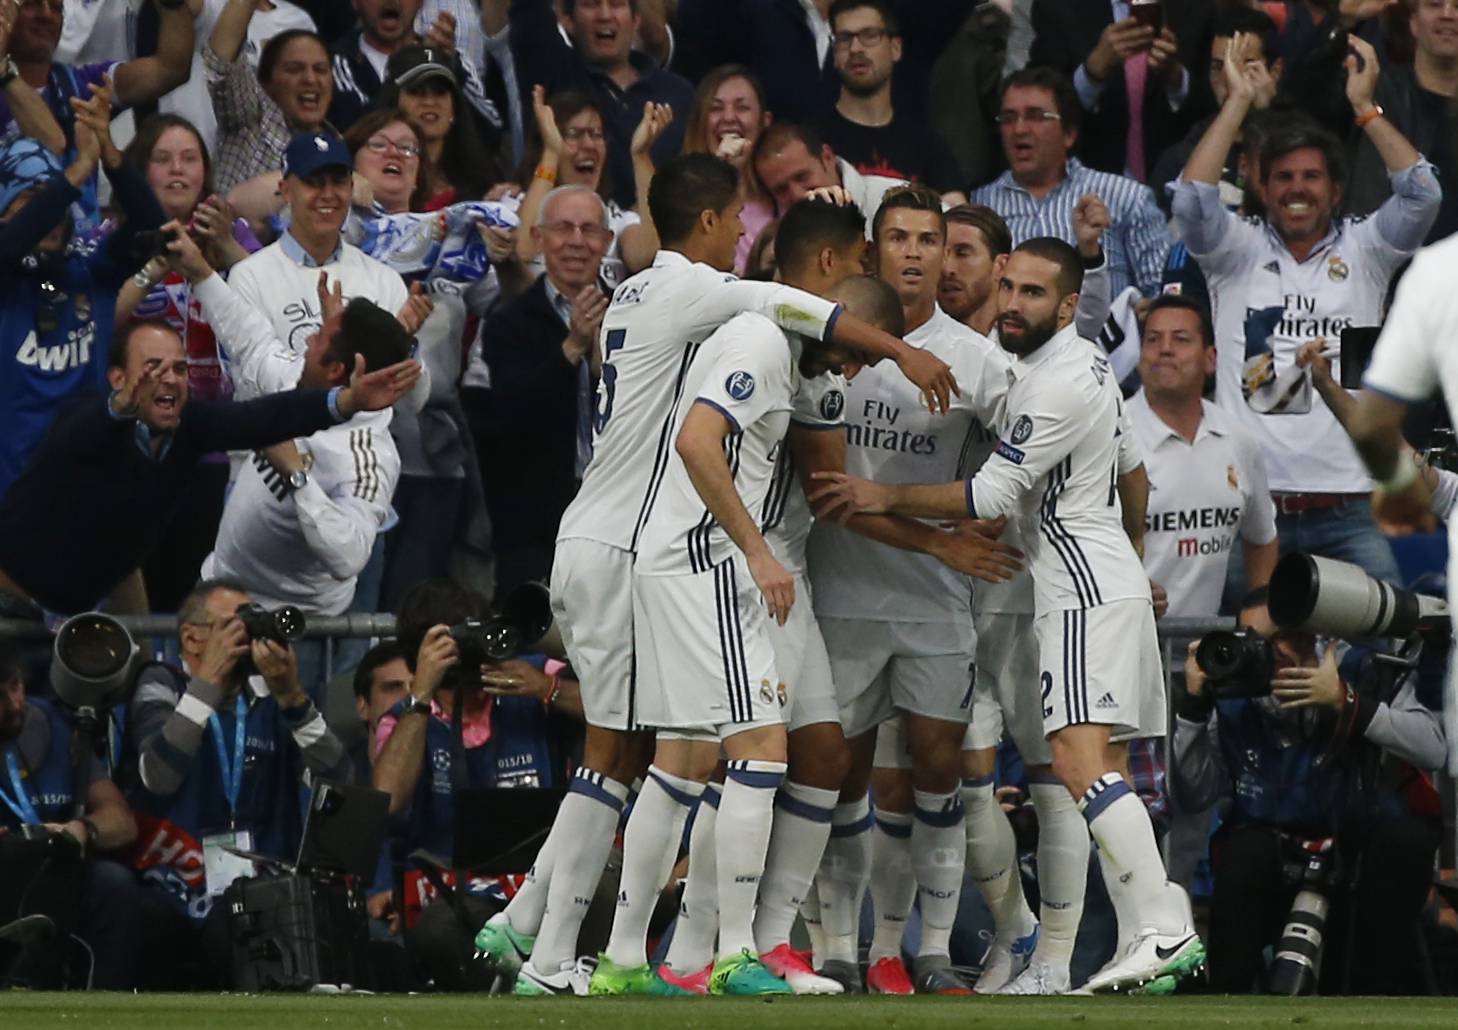 Real Madrid's Cristiano Ronaldo celebrates scoring their first goal with team mates